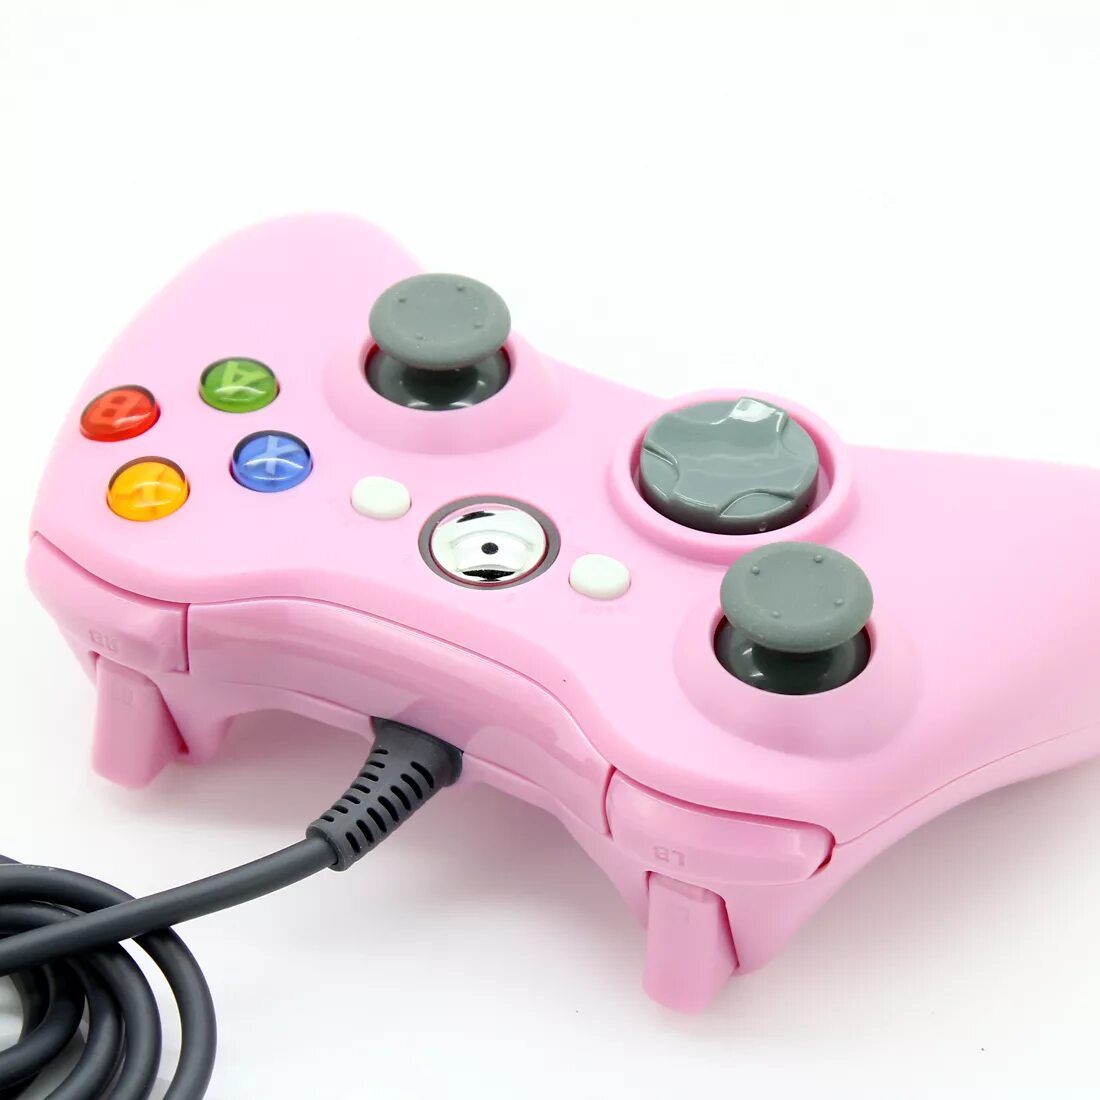 Розовый джойстик. Xbox 360 Controller Pink. Джойстик Xbox 360 розовый. Проводной геймпад Xbox 360 for Windows. Икс бокс джойстик 2014 розовый.